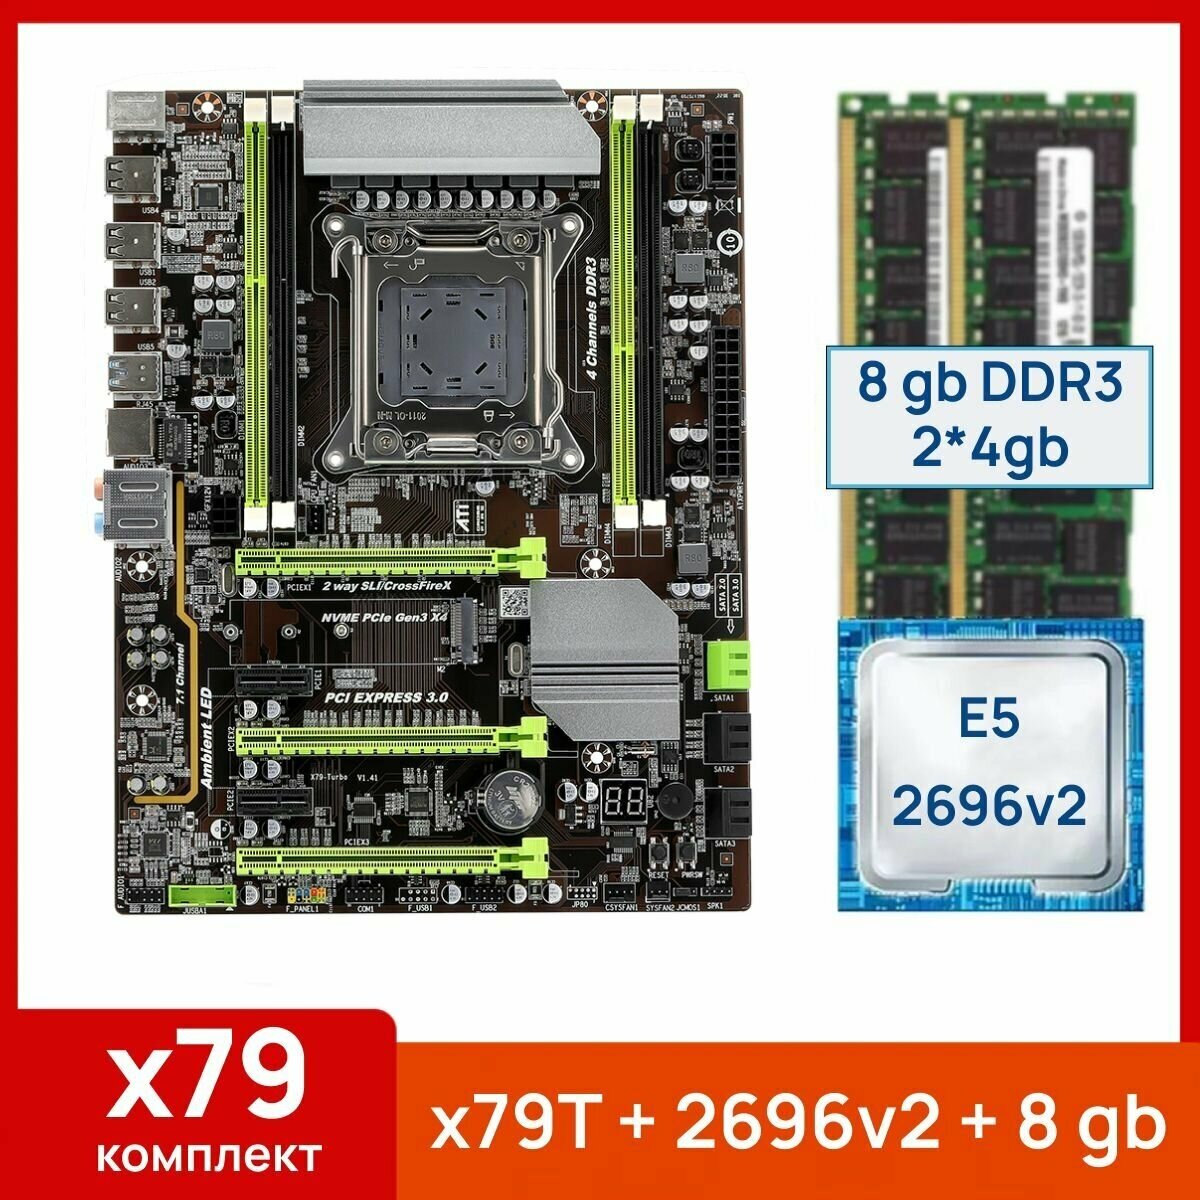 Комплект: Atermiter x79-Turbo + Xeon E5 2696v2 + 8 gb(2x4gb) DDR3 ecc reg